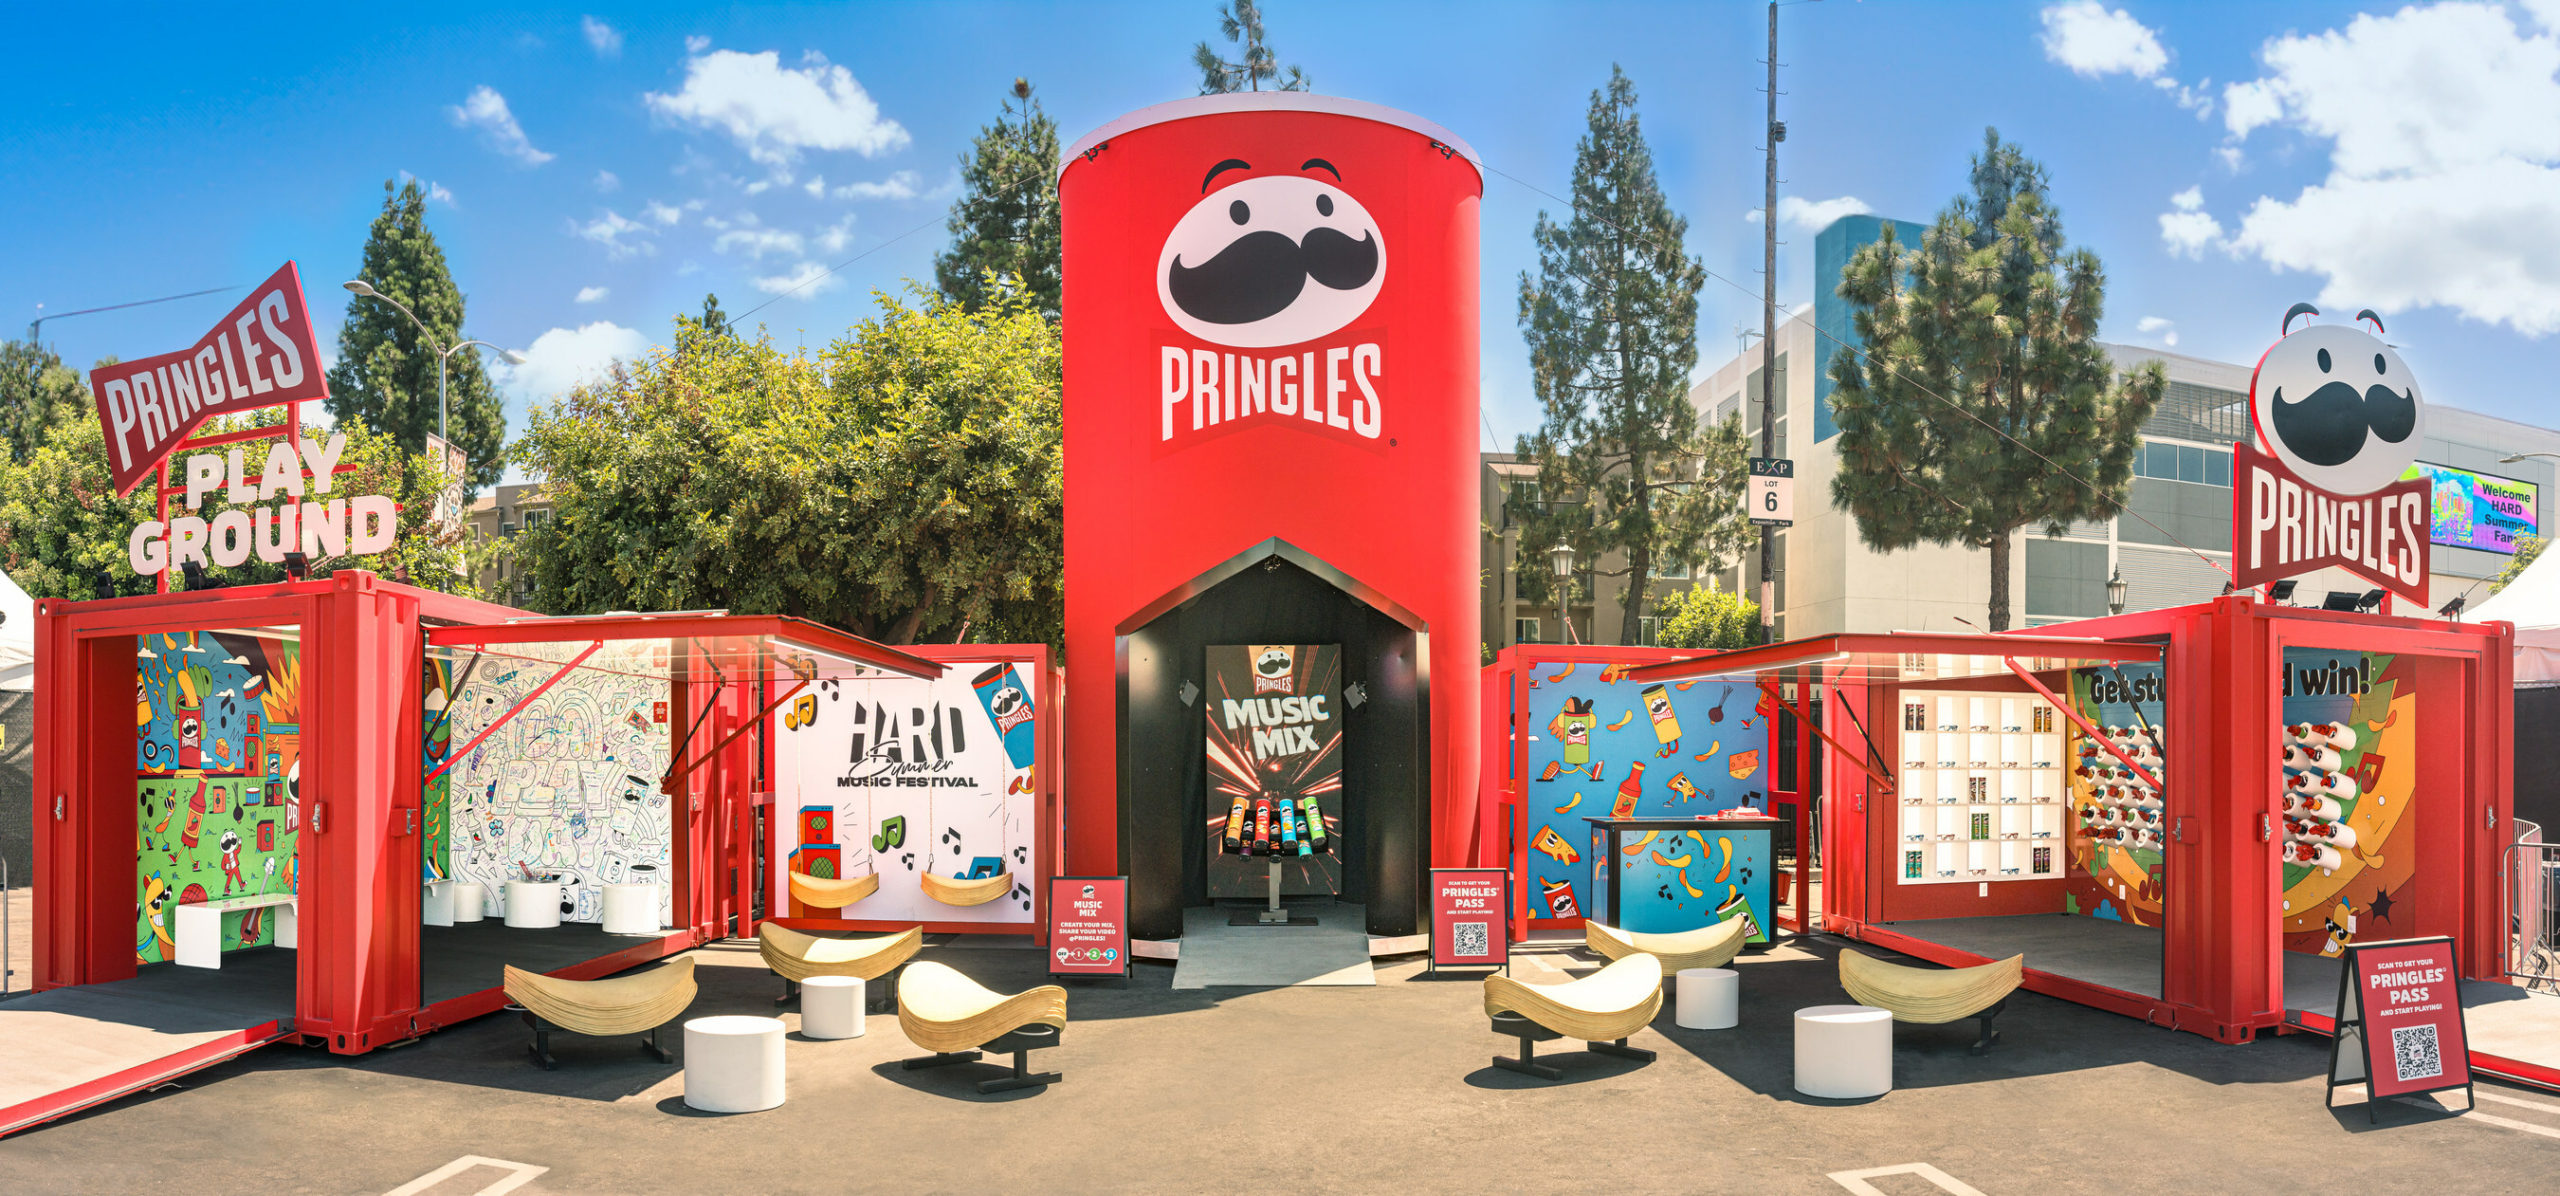 Pringles Pop-Up Shows Up at Summer Music Fests